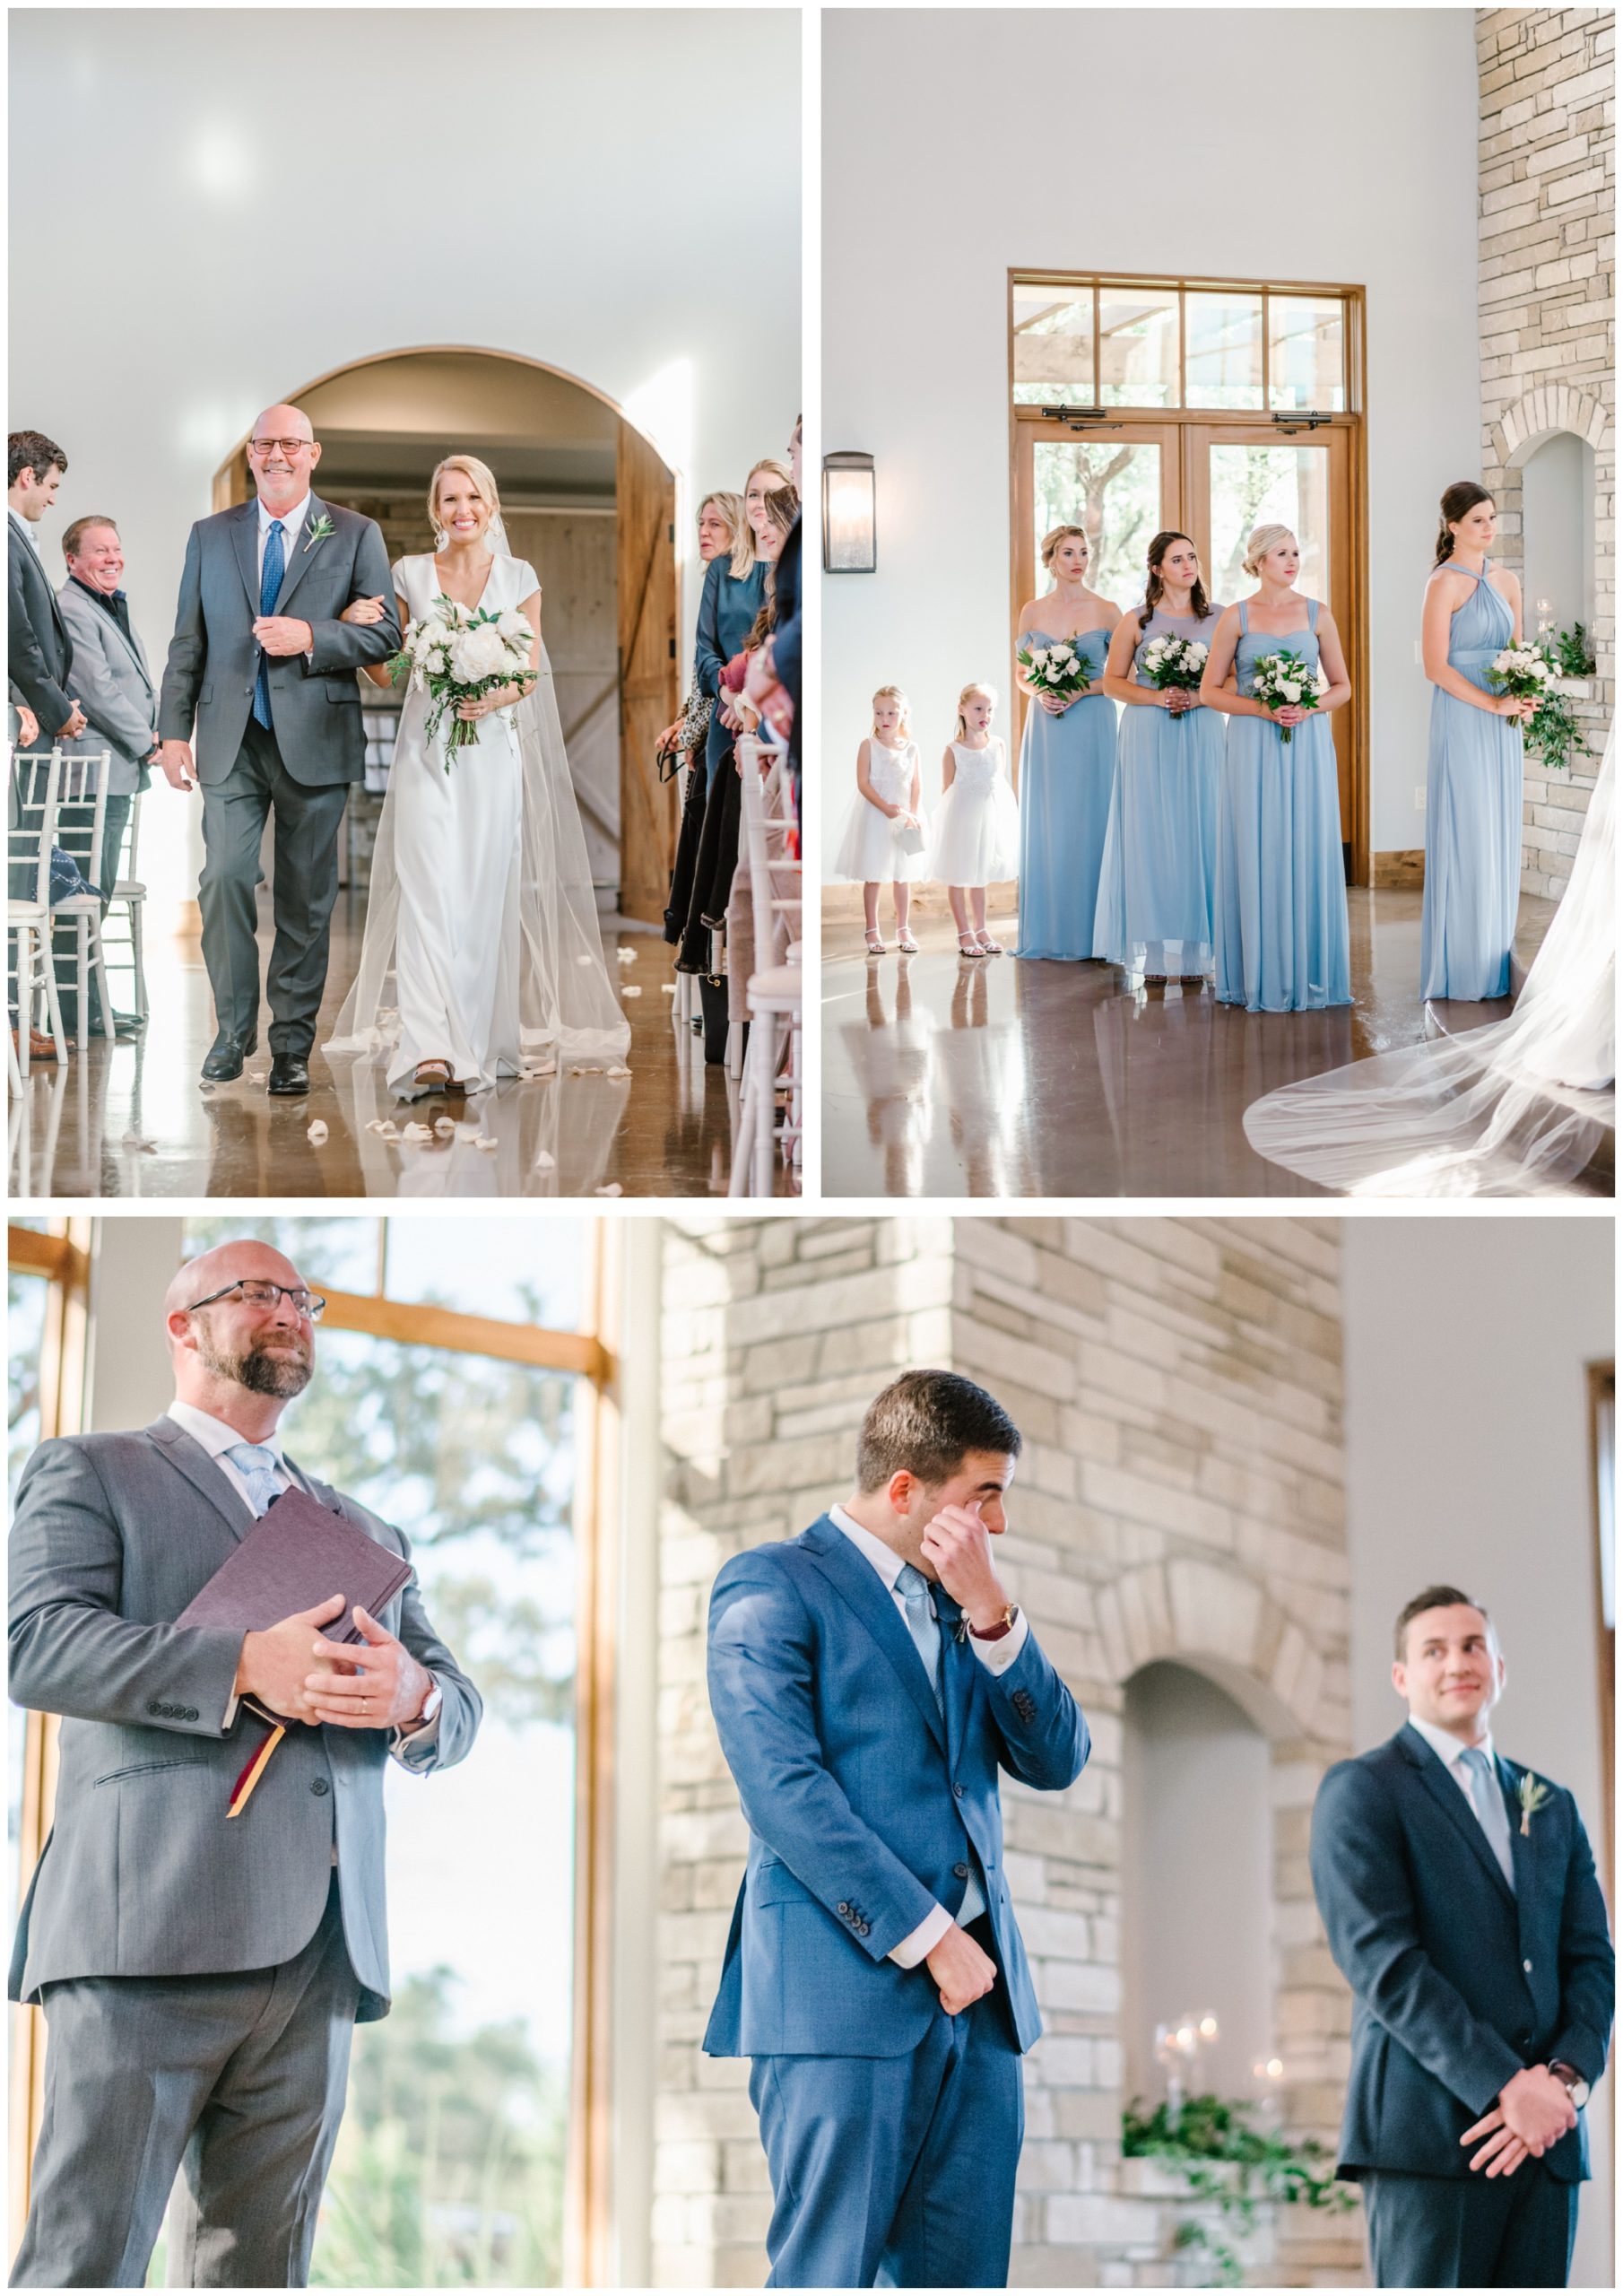 Fall wedding ceremony at Canyonwood Ridge in Austin Texas | Joslyn Holtfort Photography